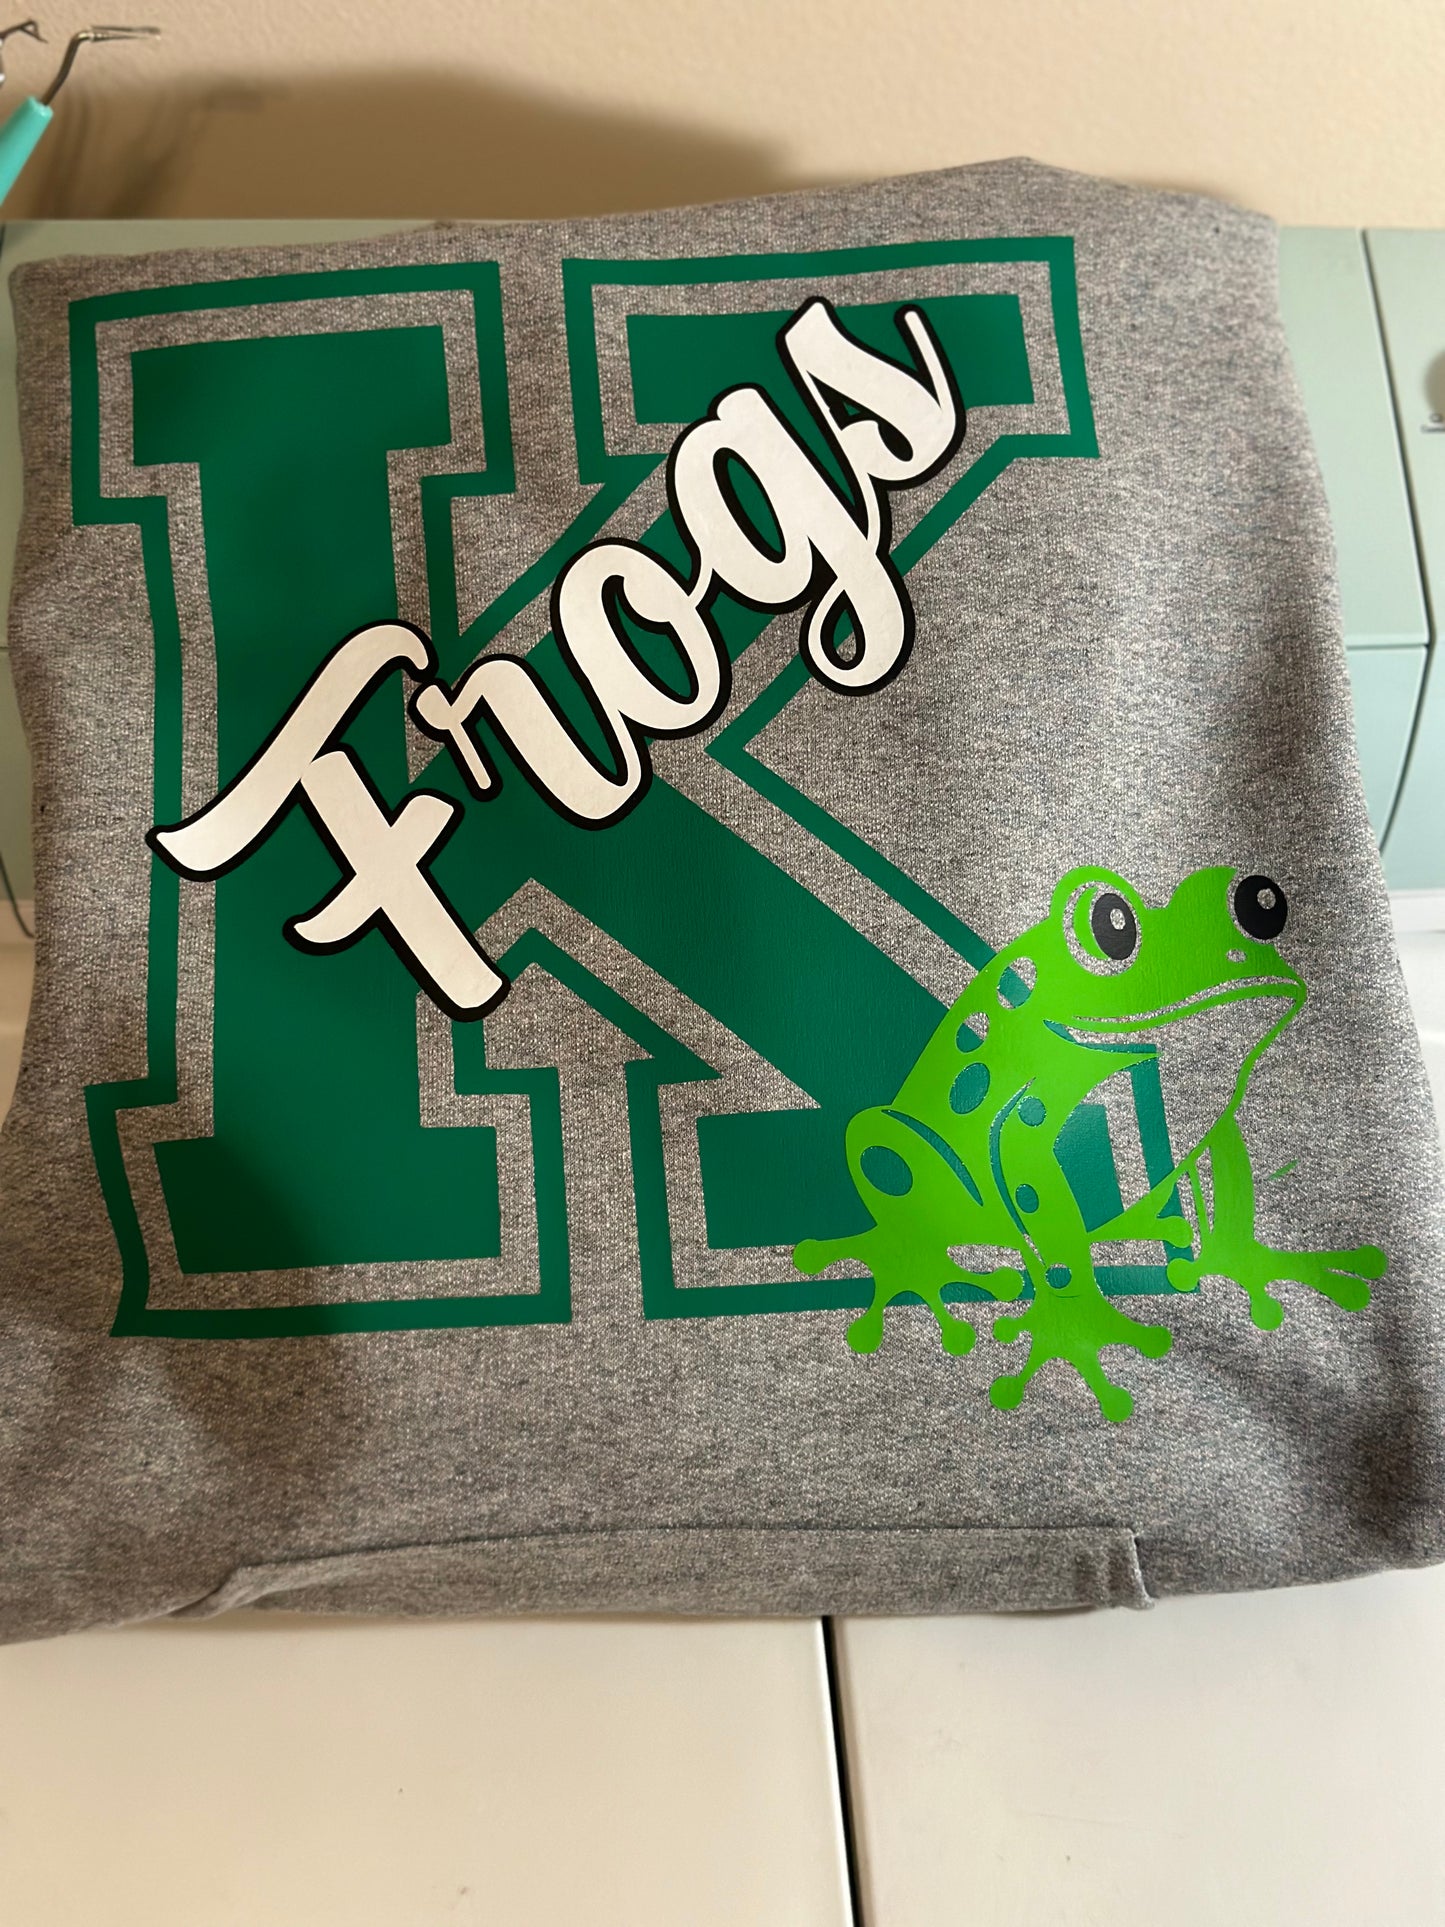 KFES Frogs Apparel